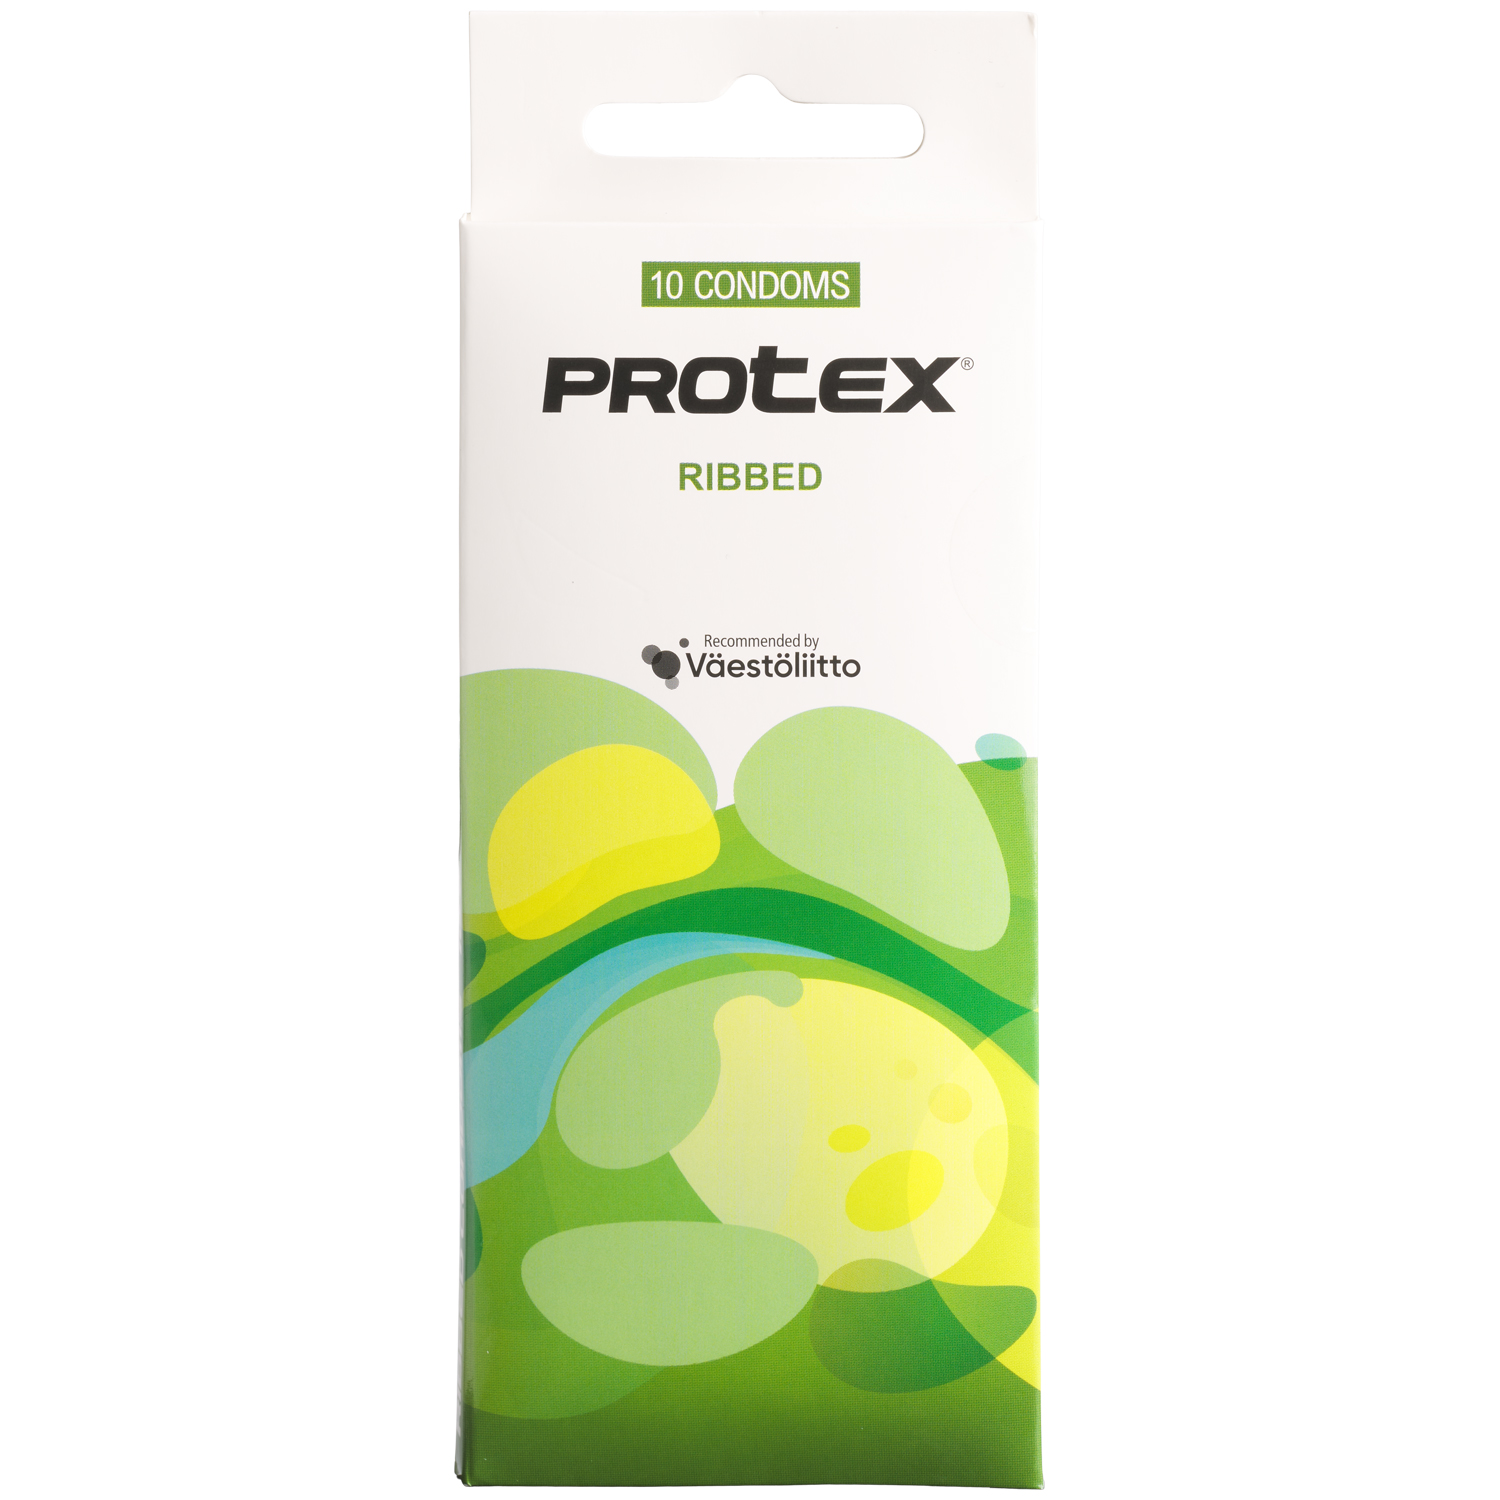 Protex Ribbed Rillede Kondomer 10 stk     - Klar thumbnail